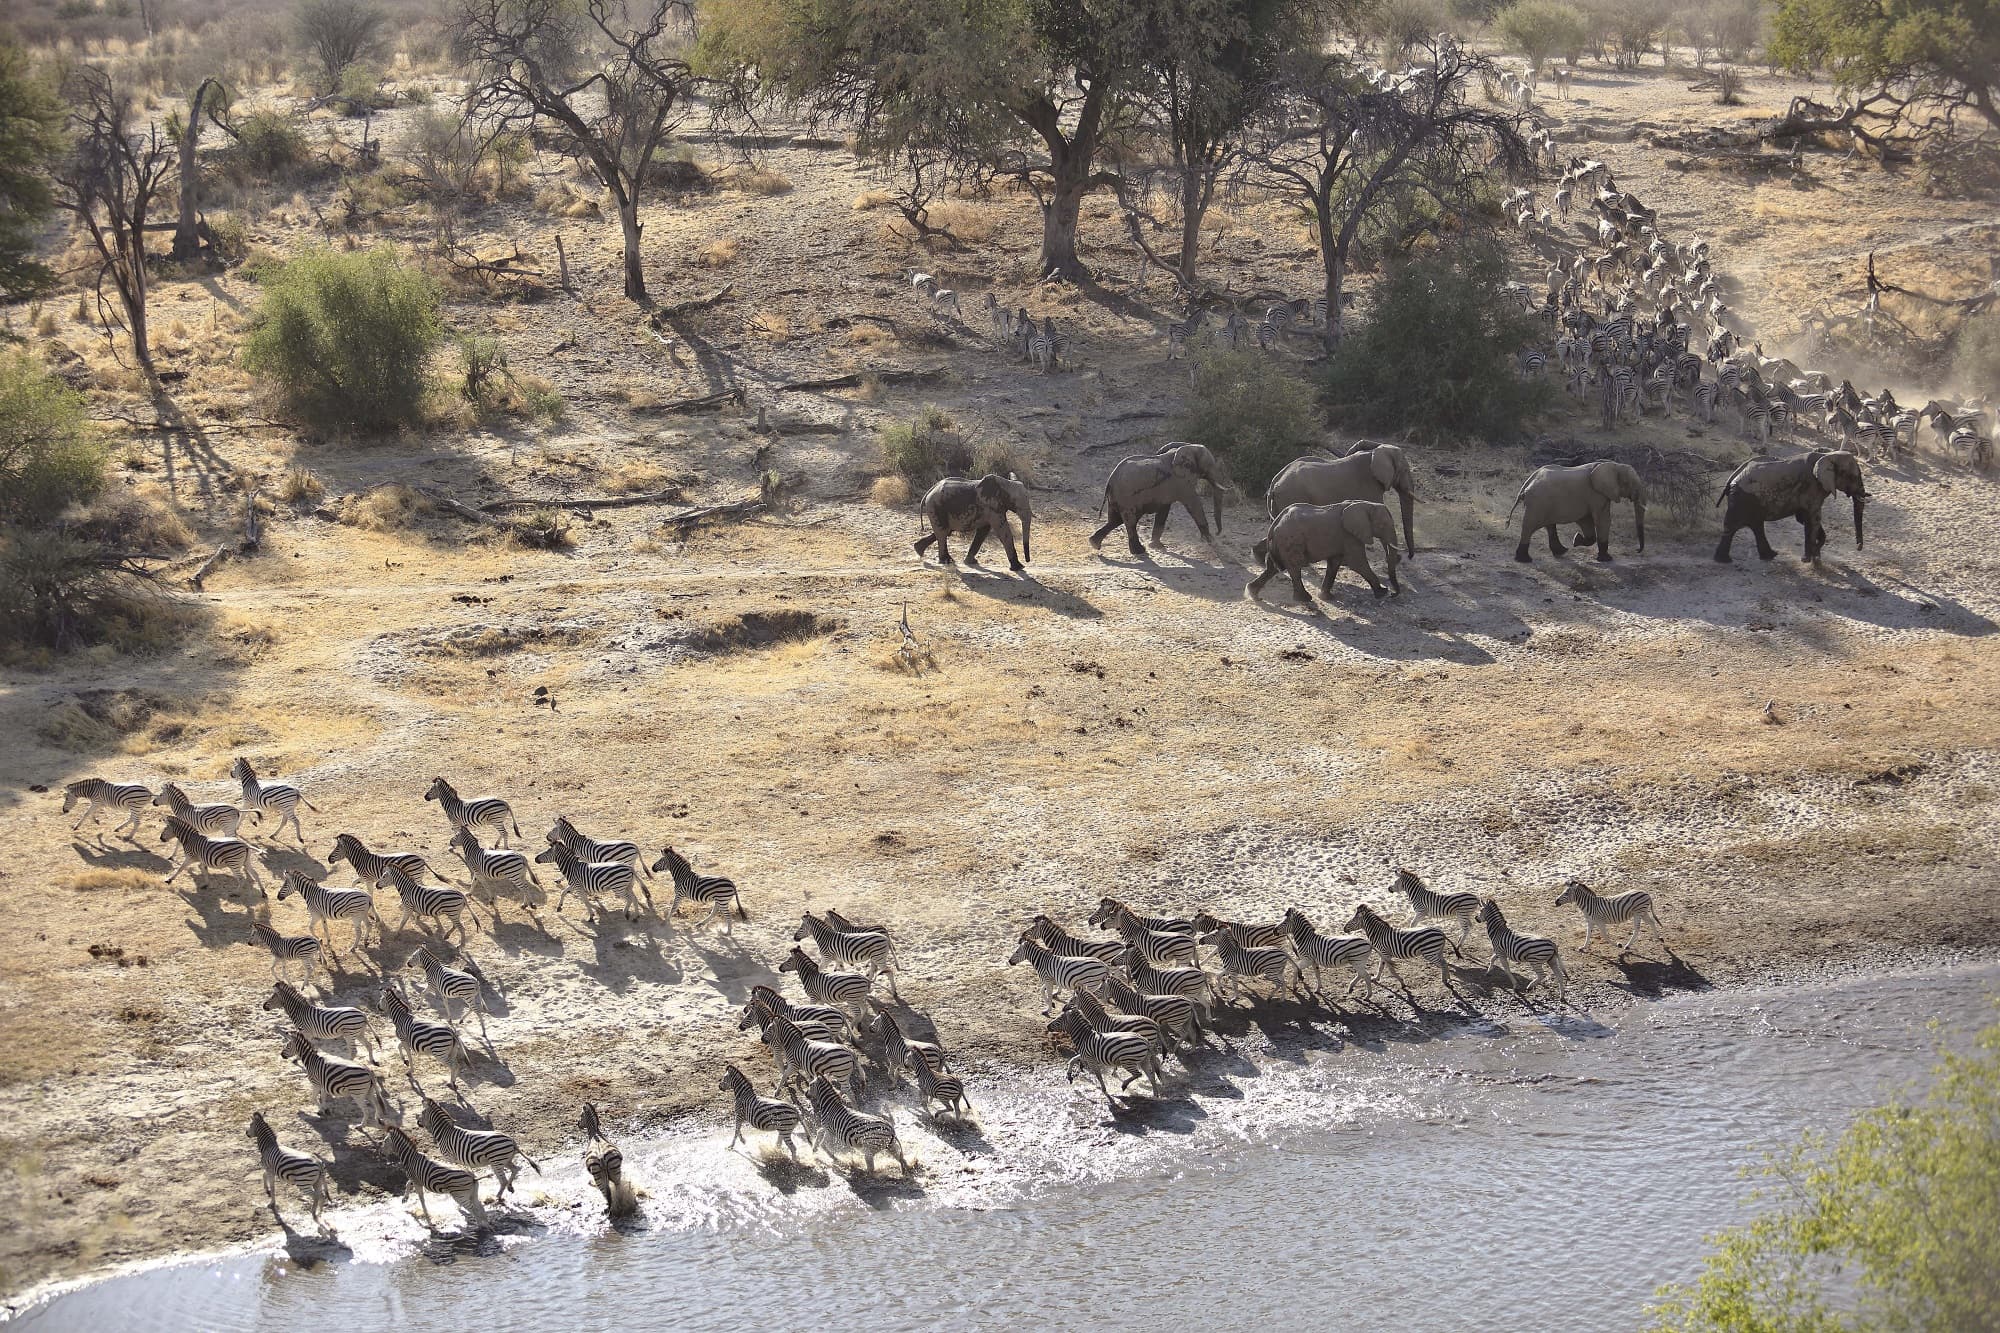 Meno a Kwena - Zebra Migration & Elephants - African Luxury